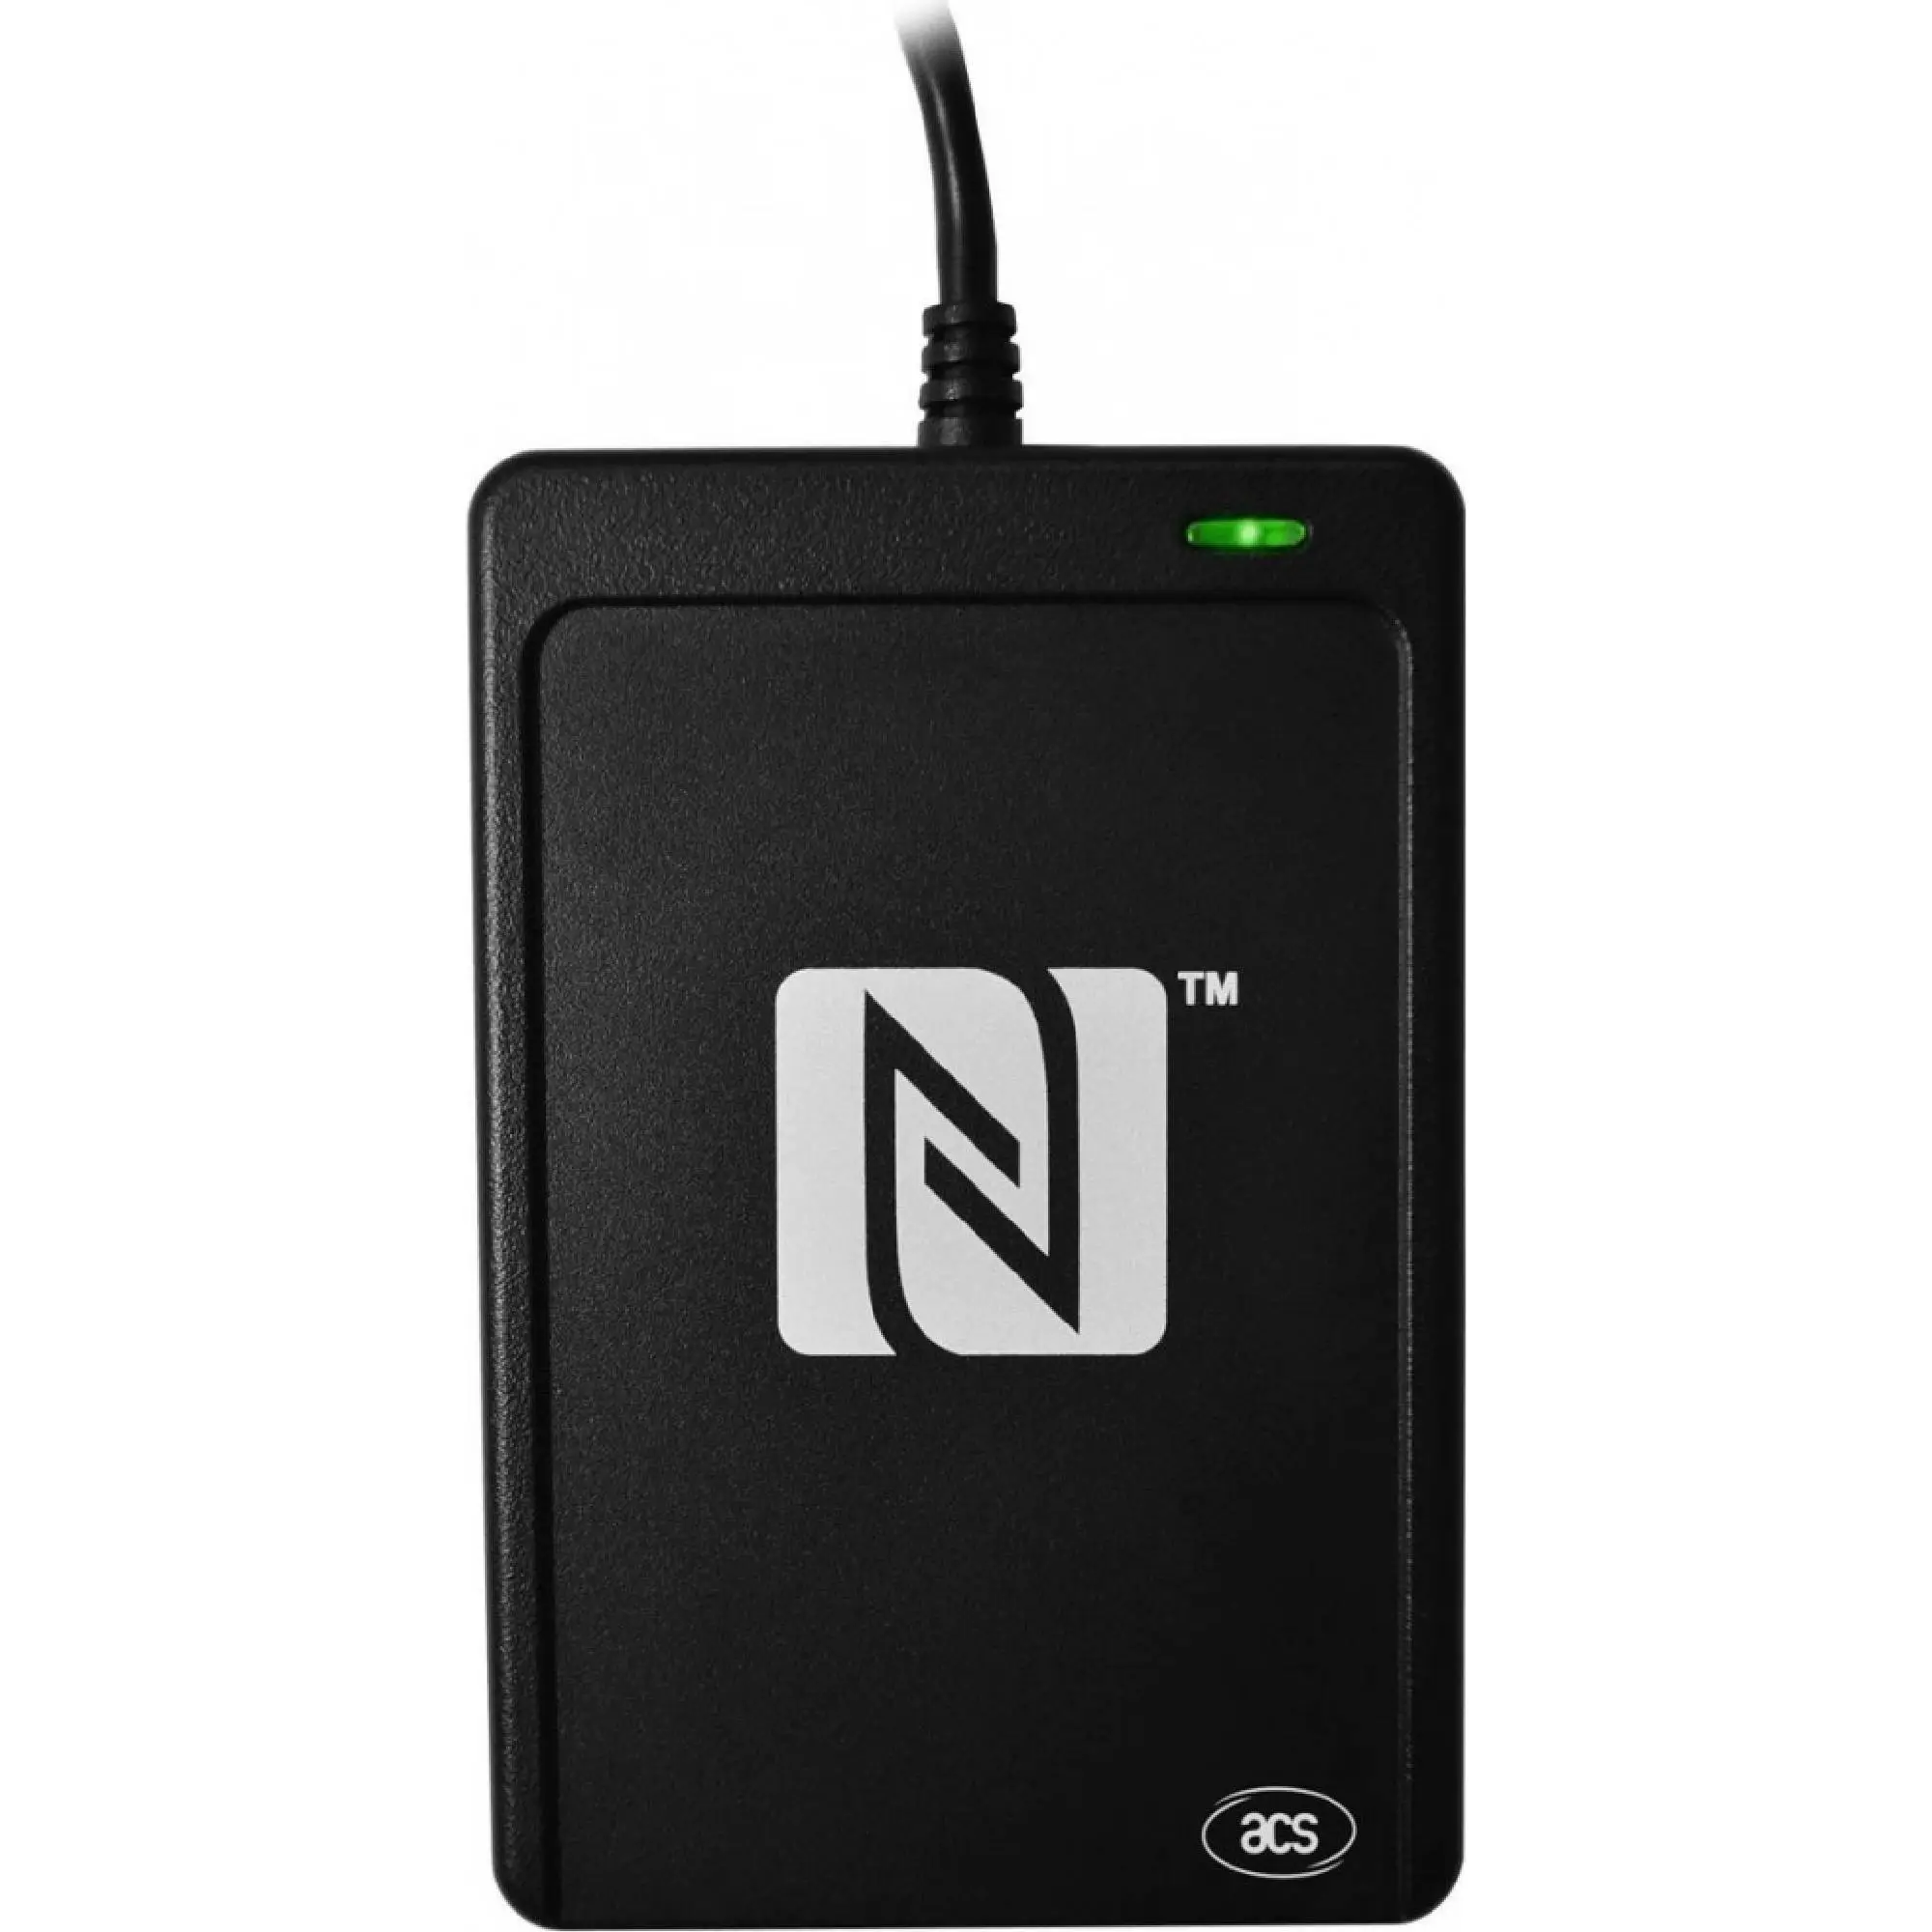 NFC Writer / Reader